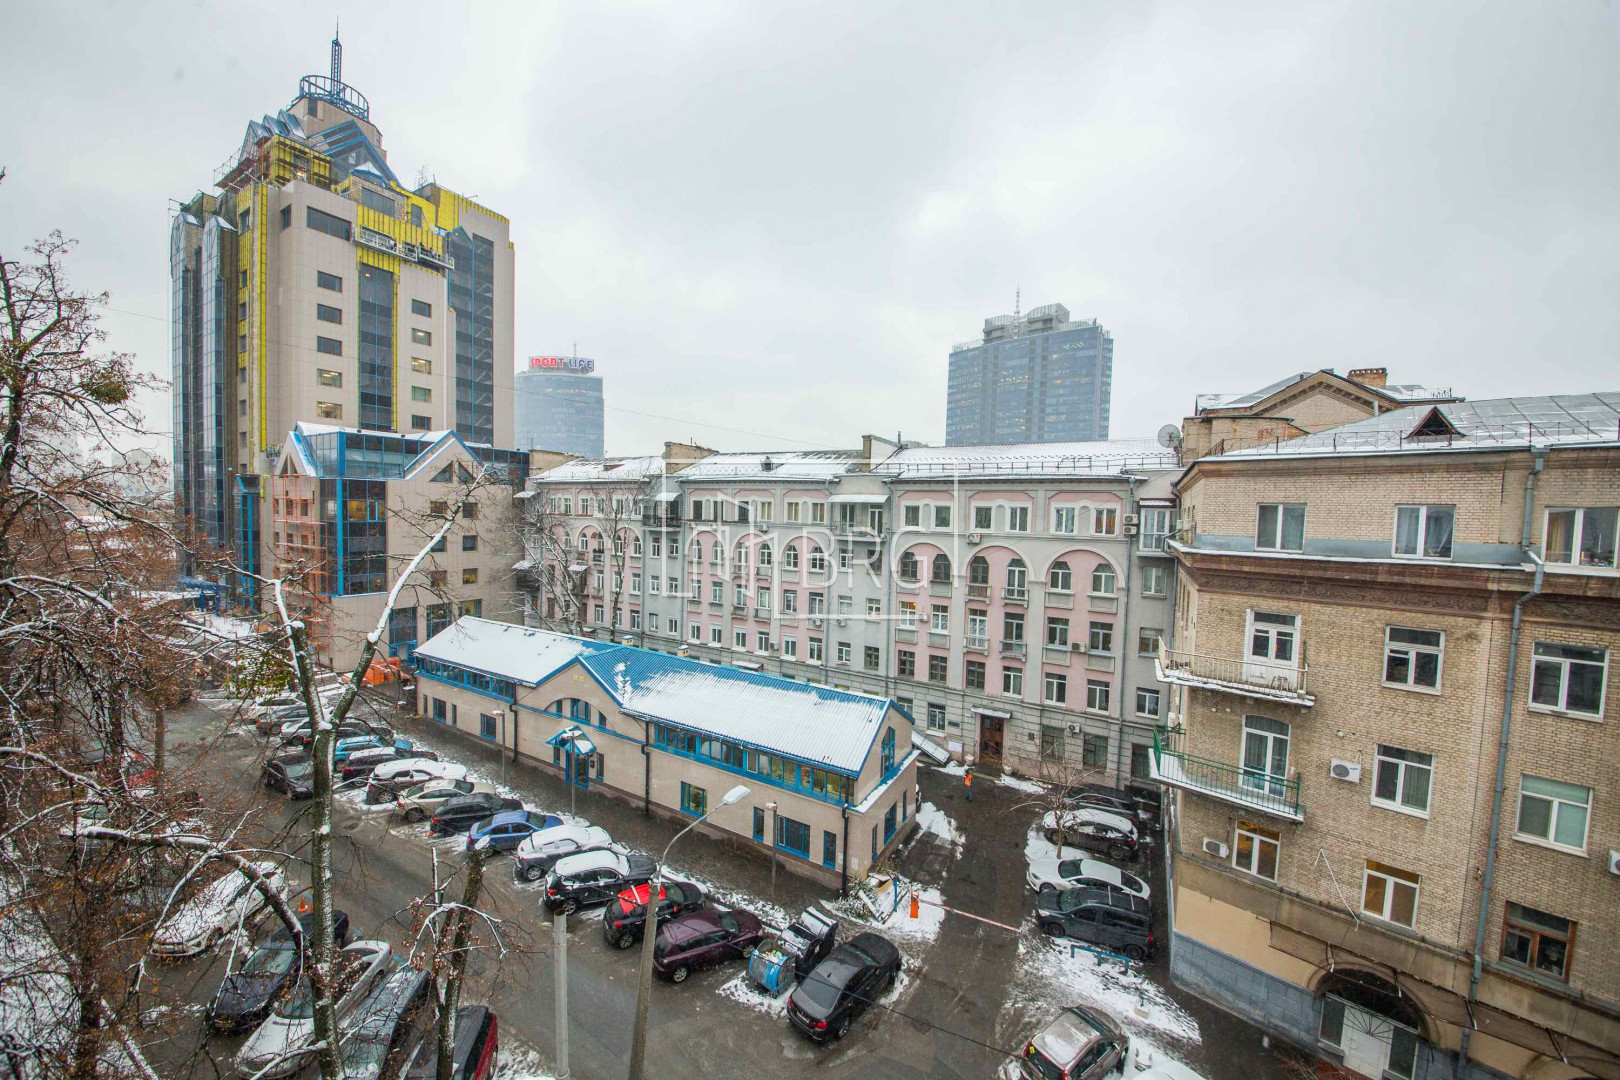 Аренда 4-х комнатной квартиры в 2-х уровнях Киев центр. Kiev